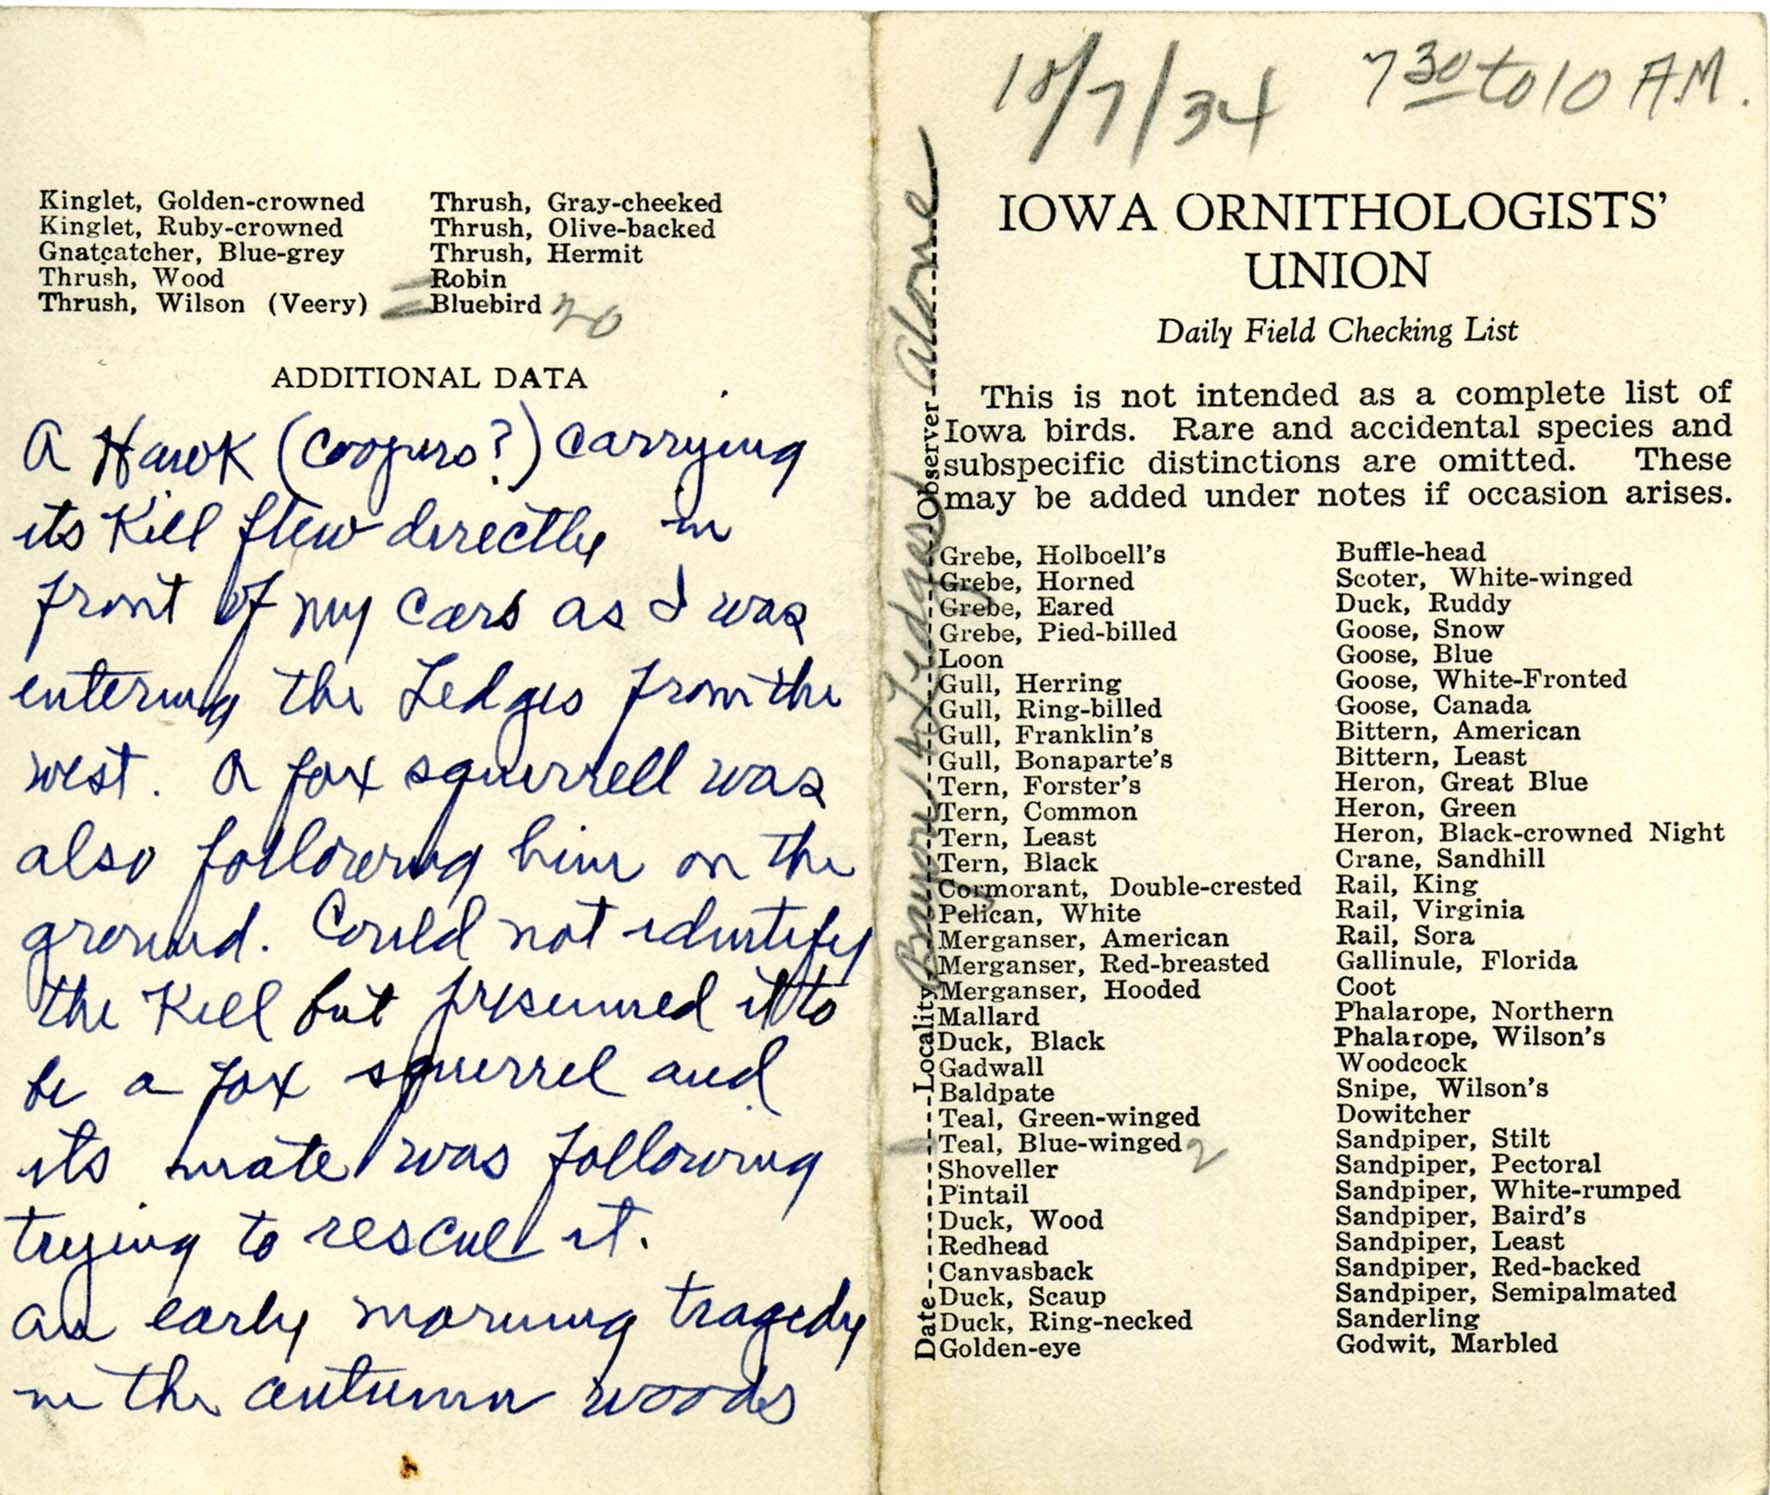 Daily field checking list, Walter Rosene, October 7, 1934